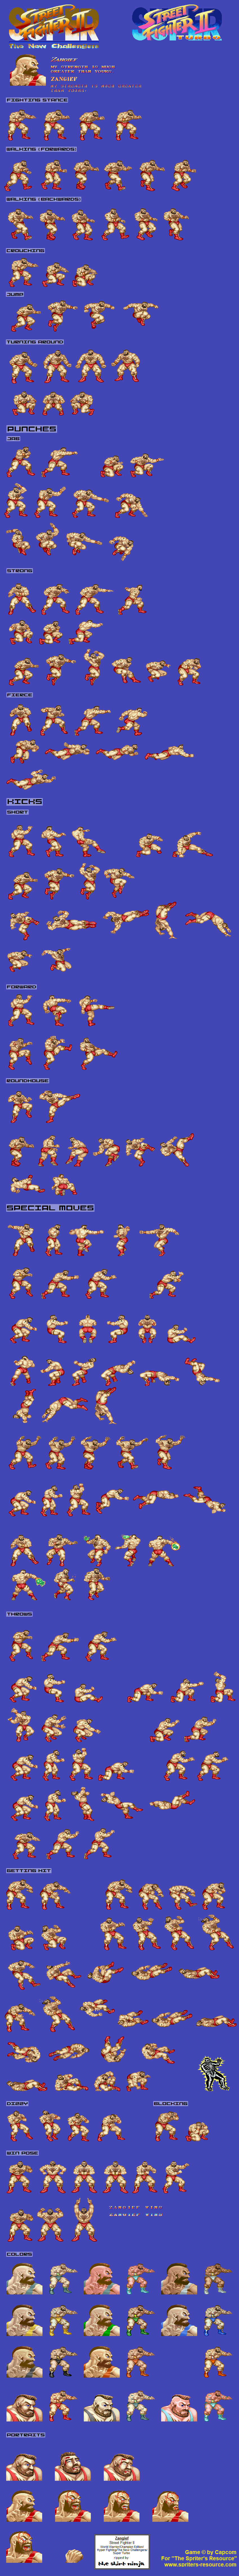 Street Fighter 2 / Super Street Fighter 2 - Zangief